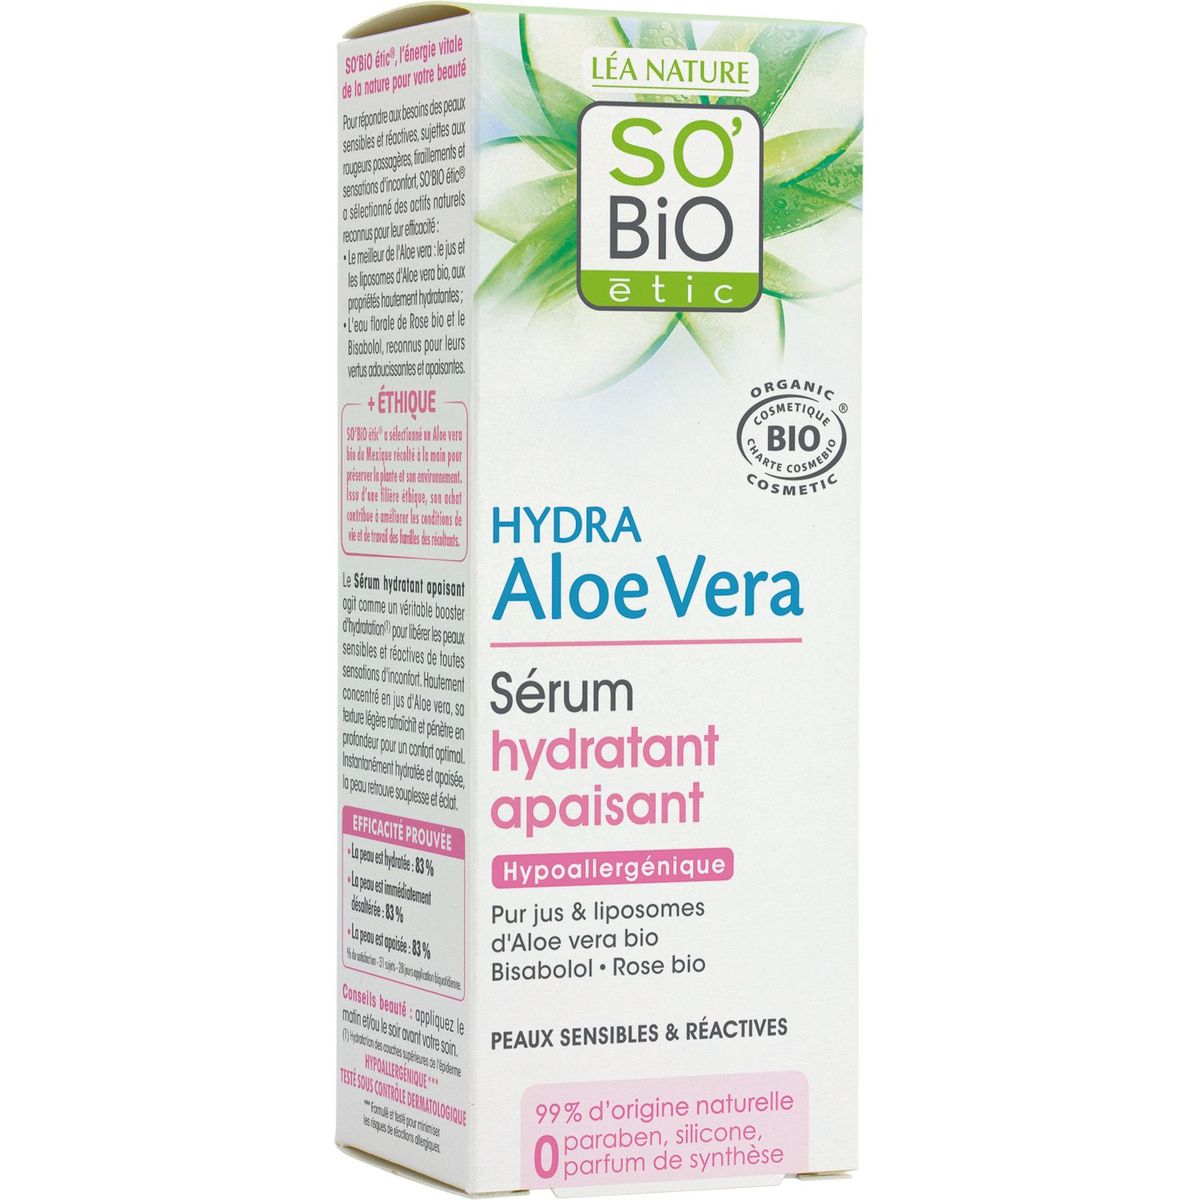 So Bio Etic serum hydratant peaux sensibles aloé vera 30ml